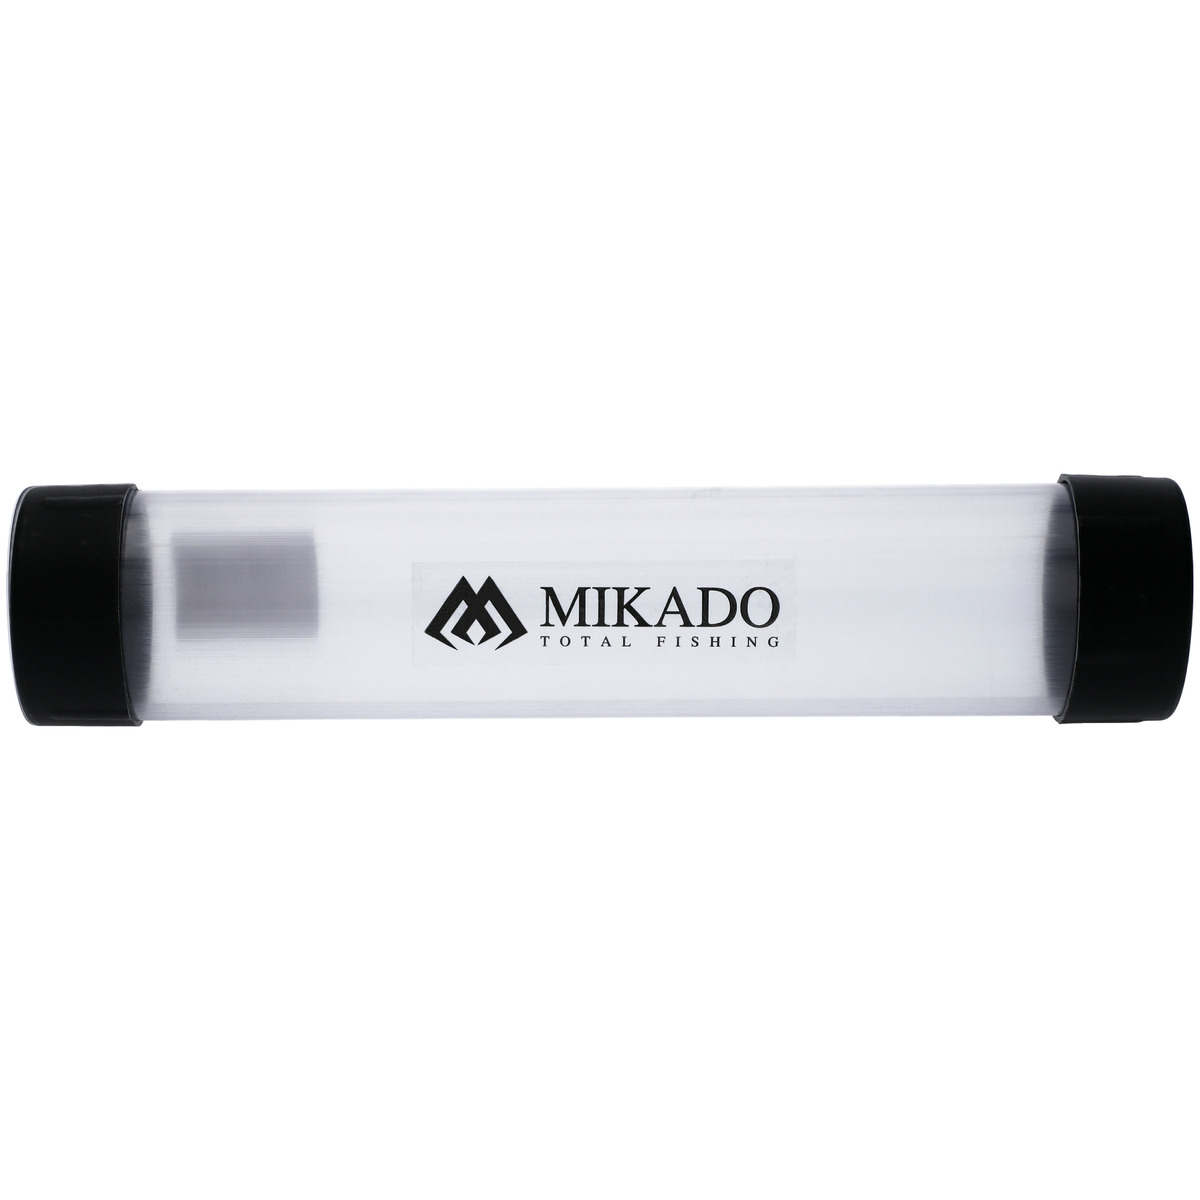 Mikado Tubefor Floats - H614 (6.5x30 cm)